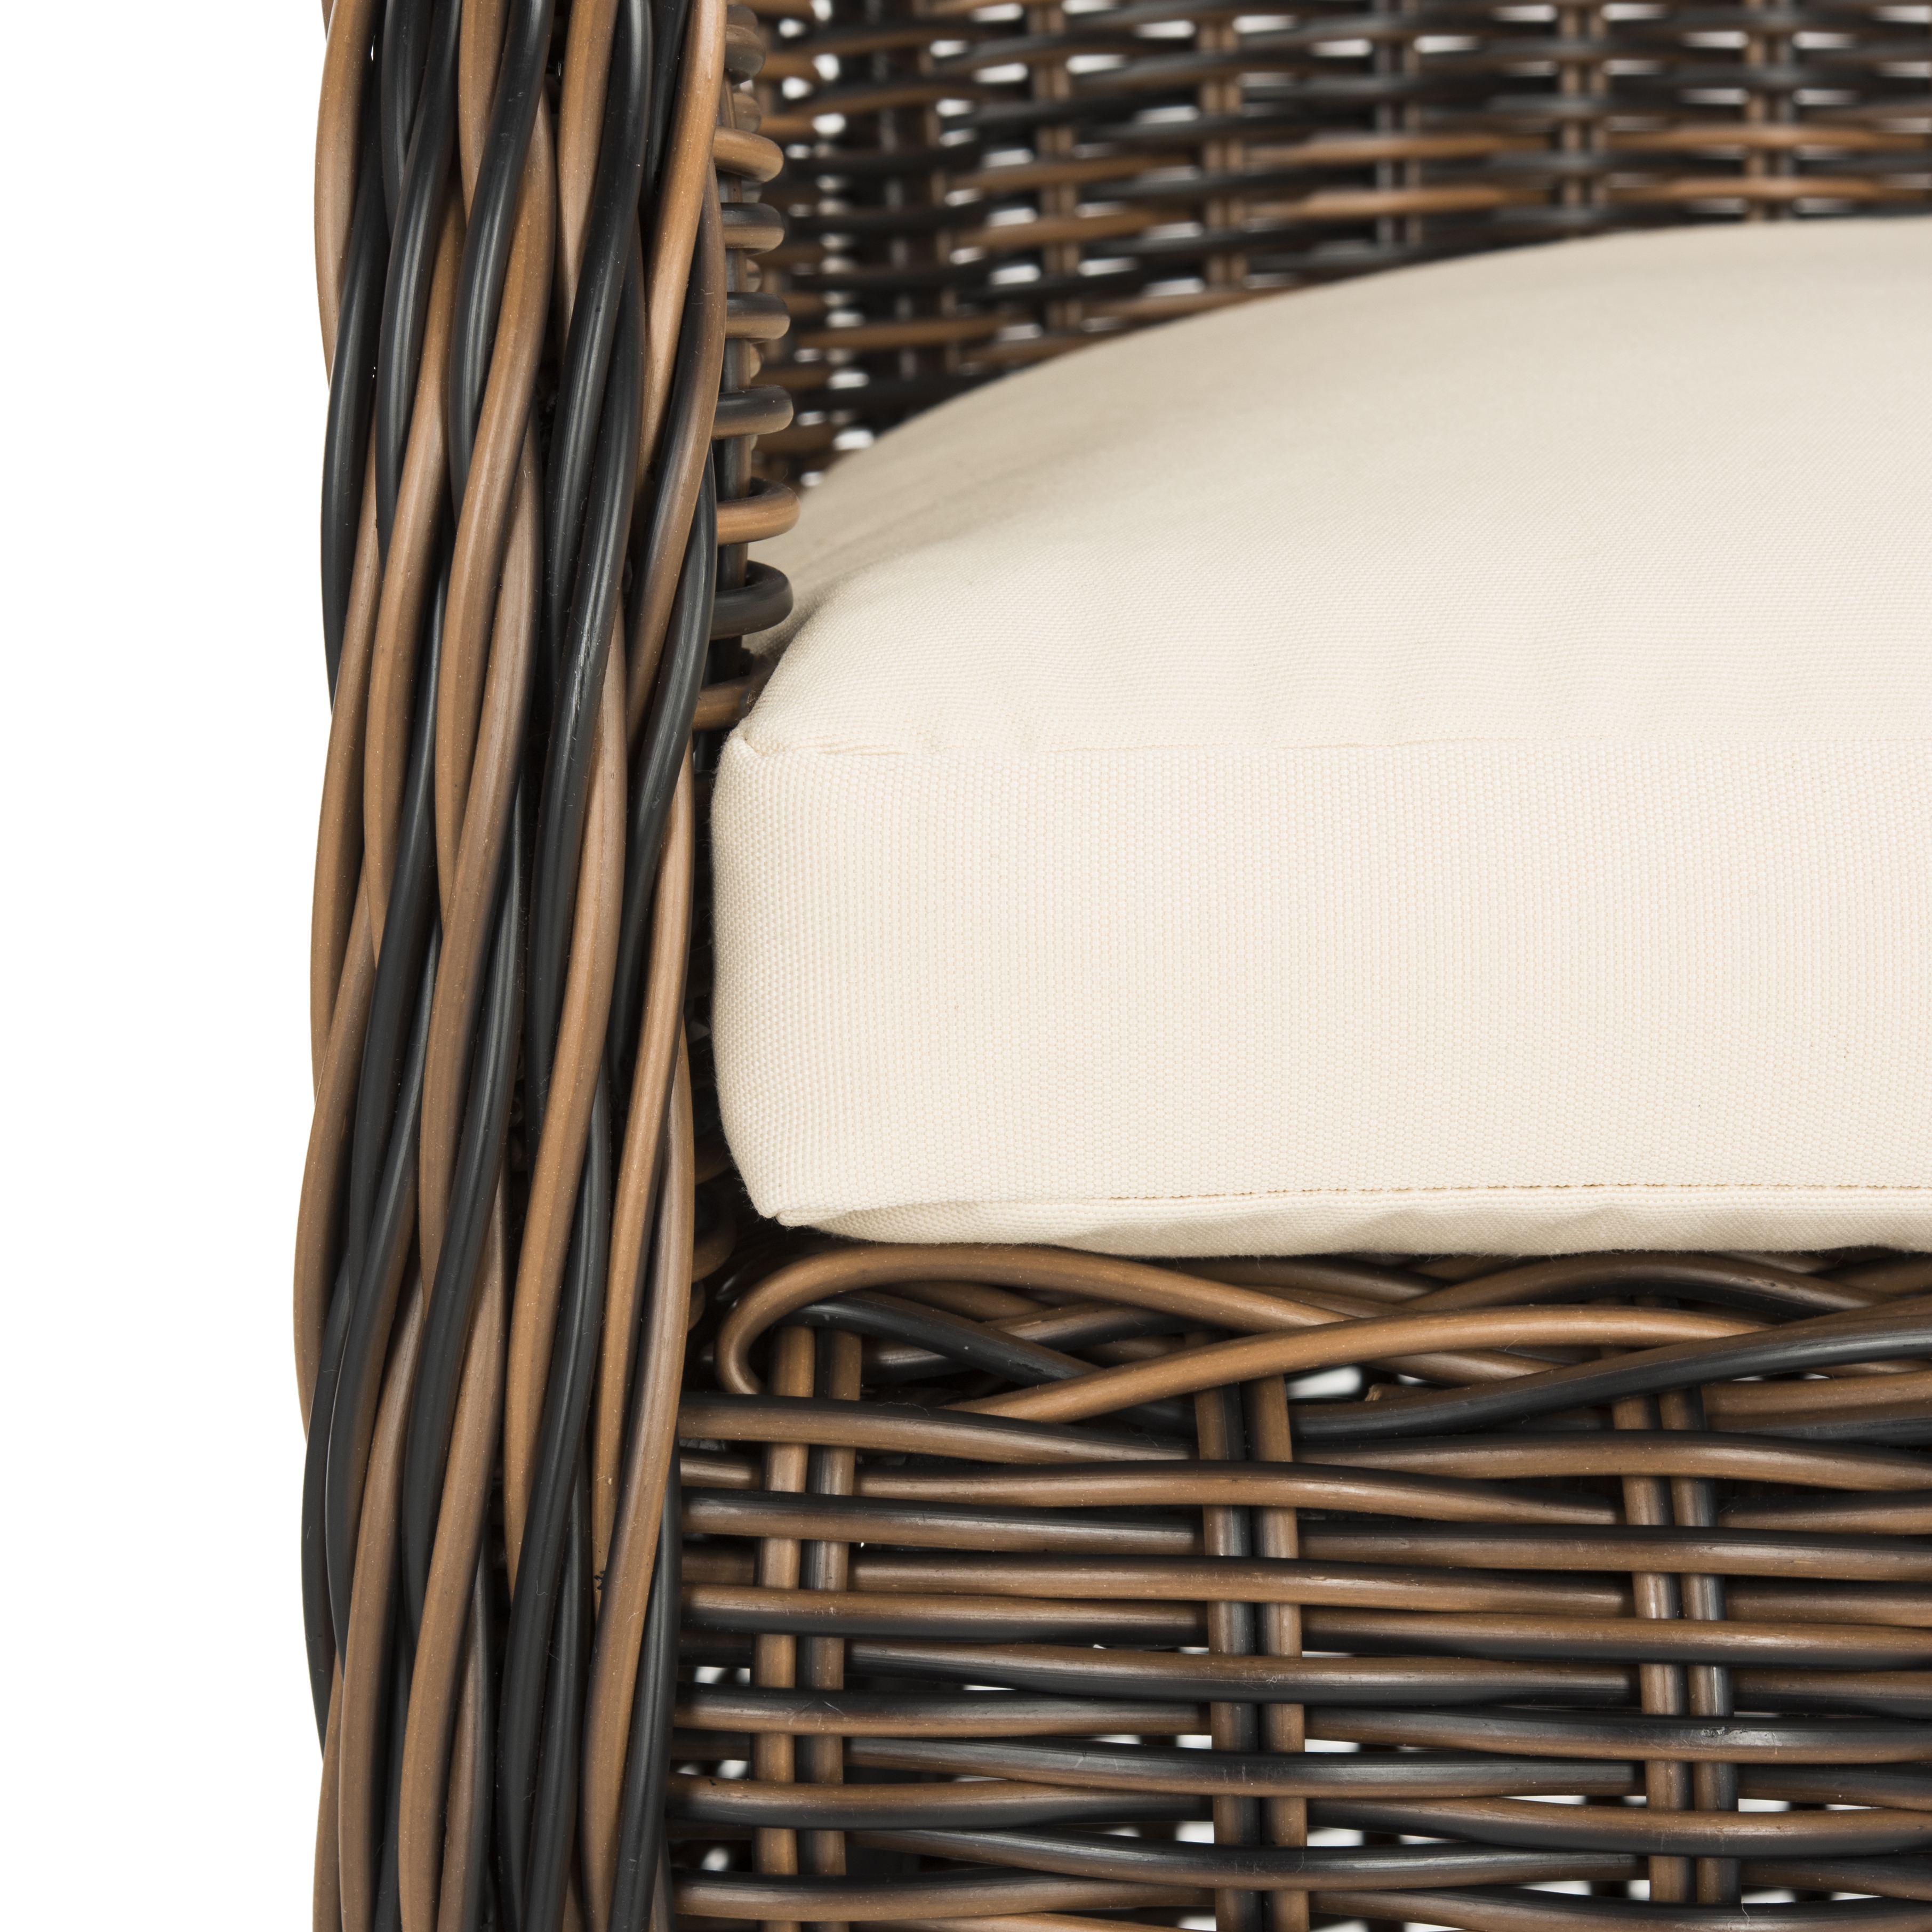 Newton Wicker Arm Chair With Cushion - Brown/Beige - Safavieh - Image 6